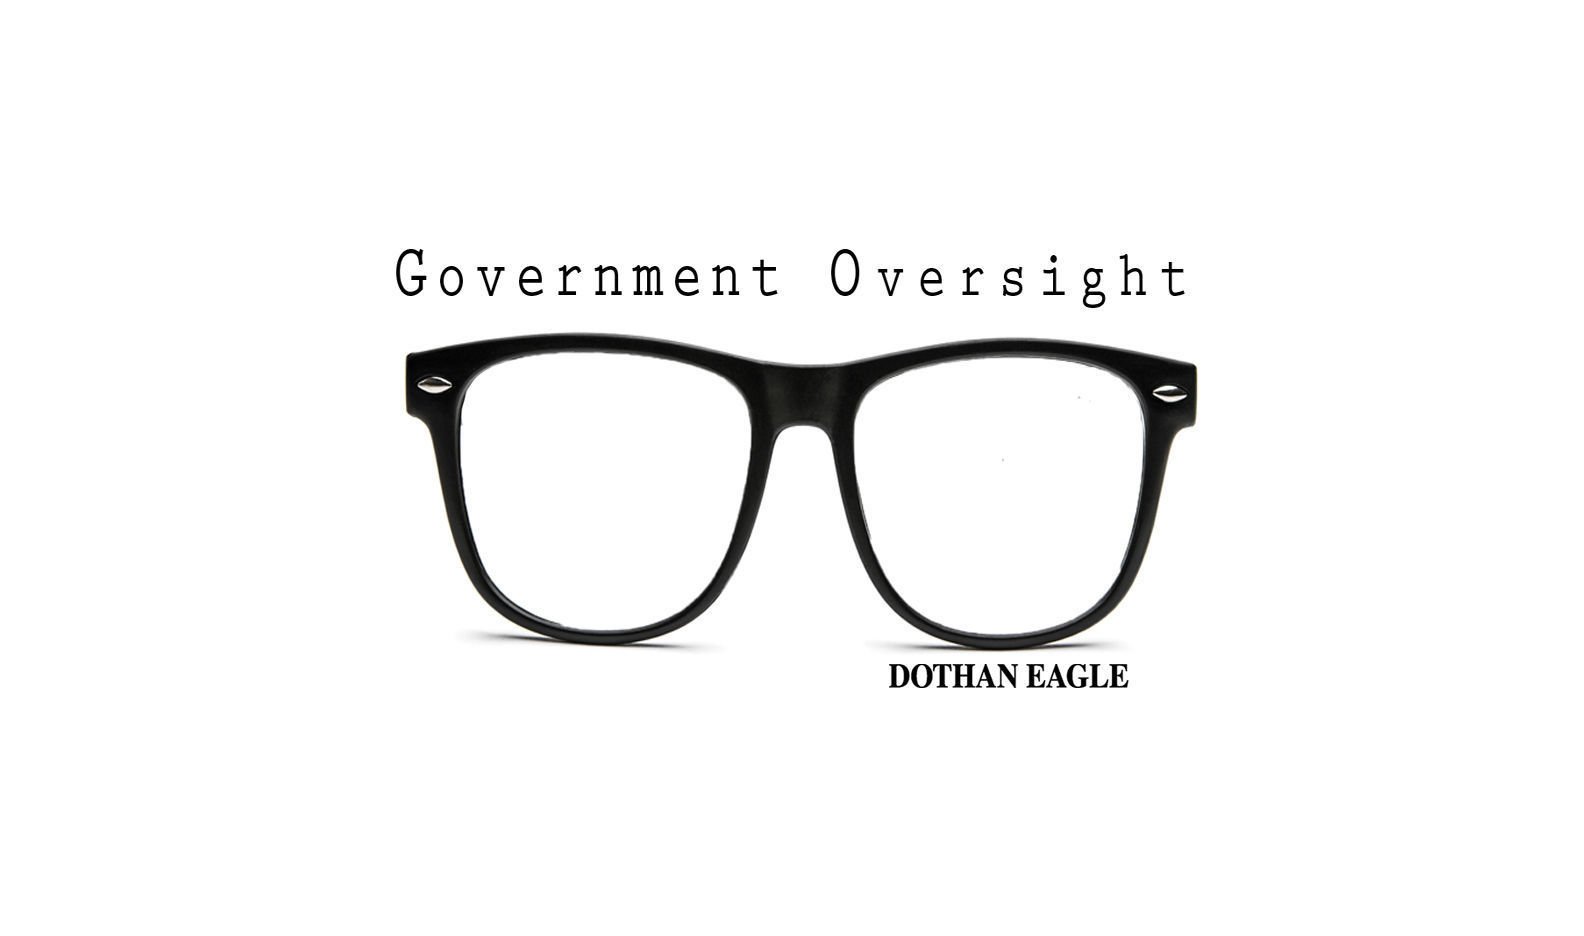 oversight definition ap gov